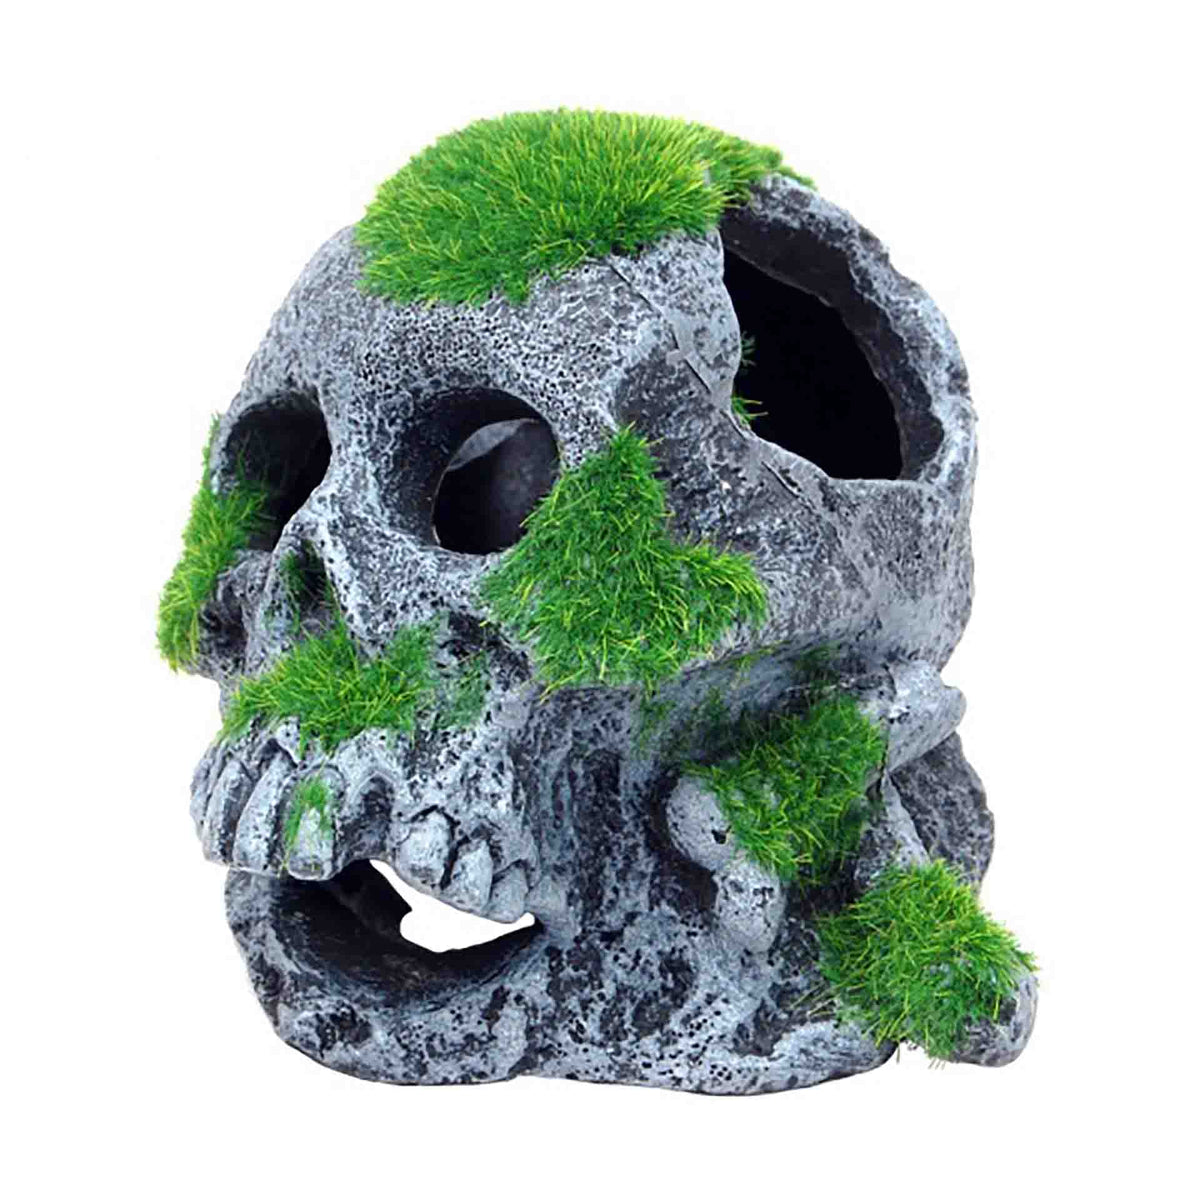 Bioscape - Moss Covered Skull - 12 x 13cm Aquarium Ornament